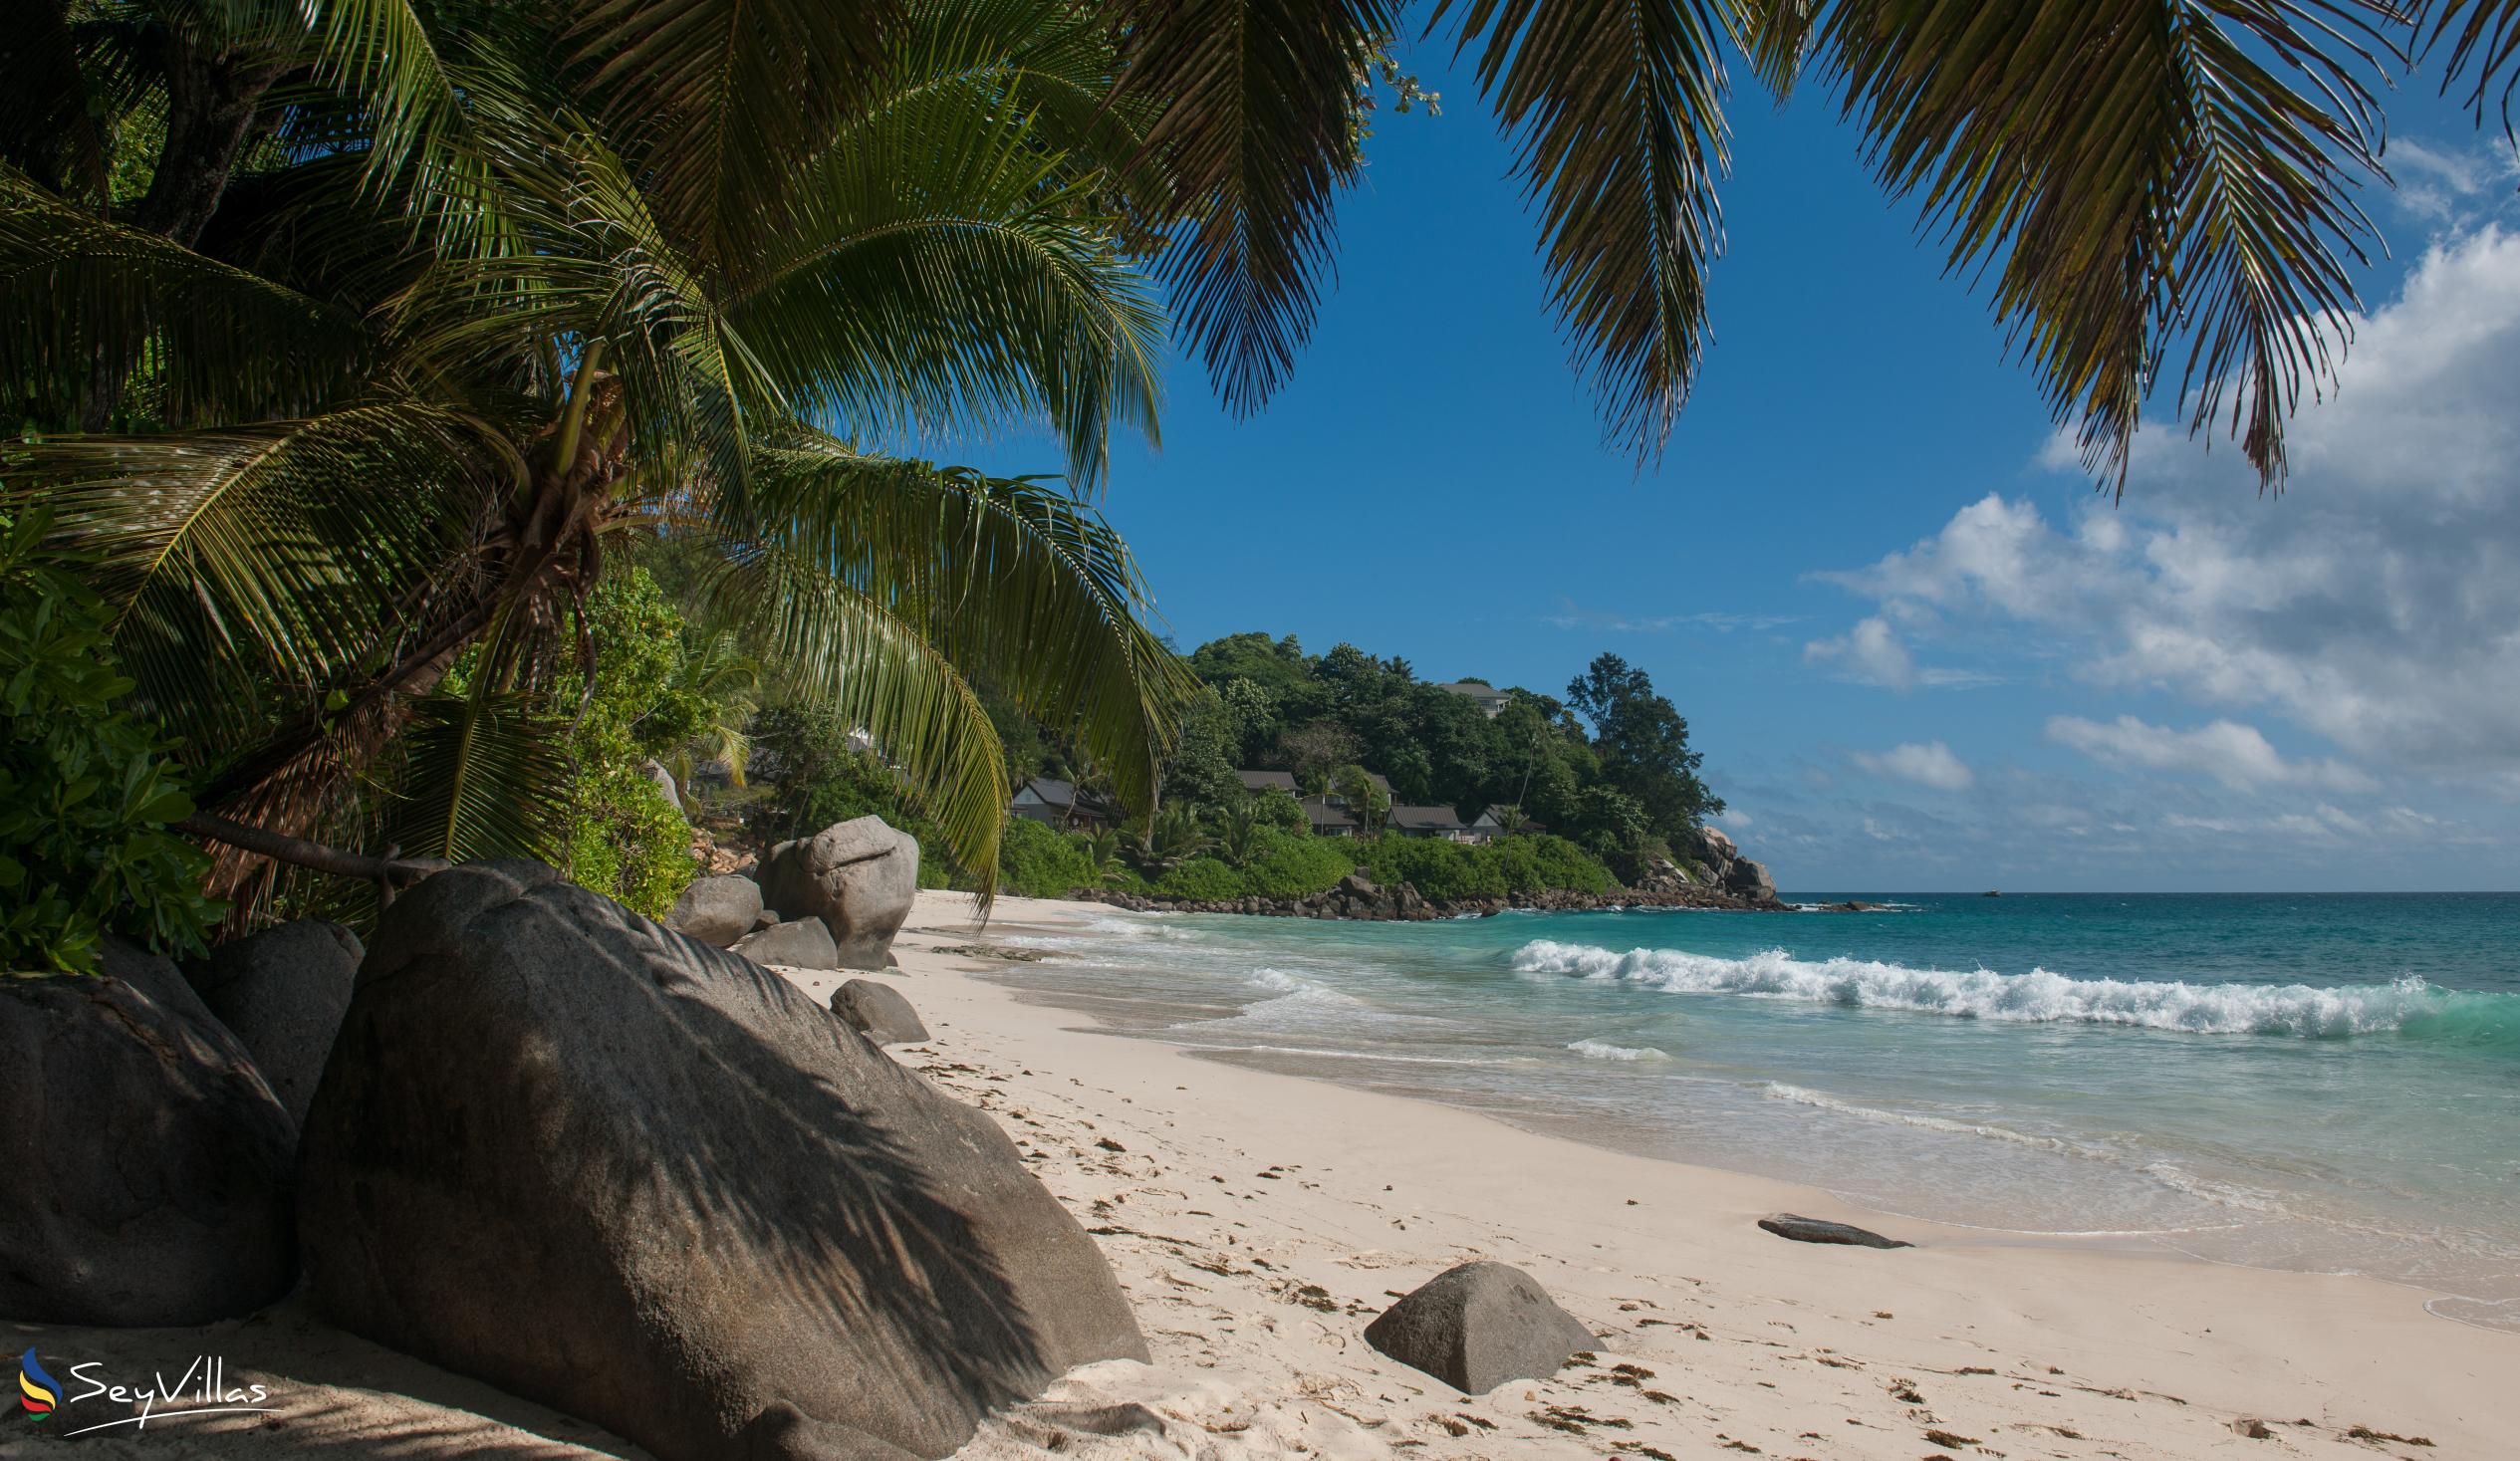 Photo 66: Carana Beach Hotel - Location - Mahé (Seychelles)